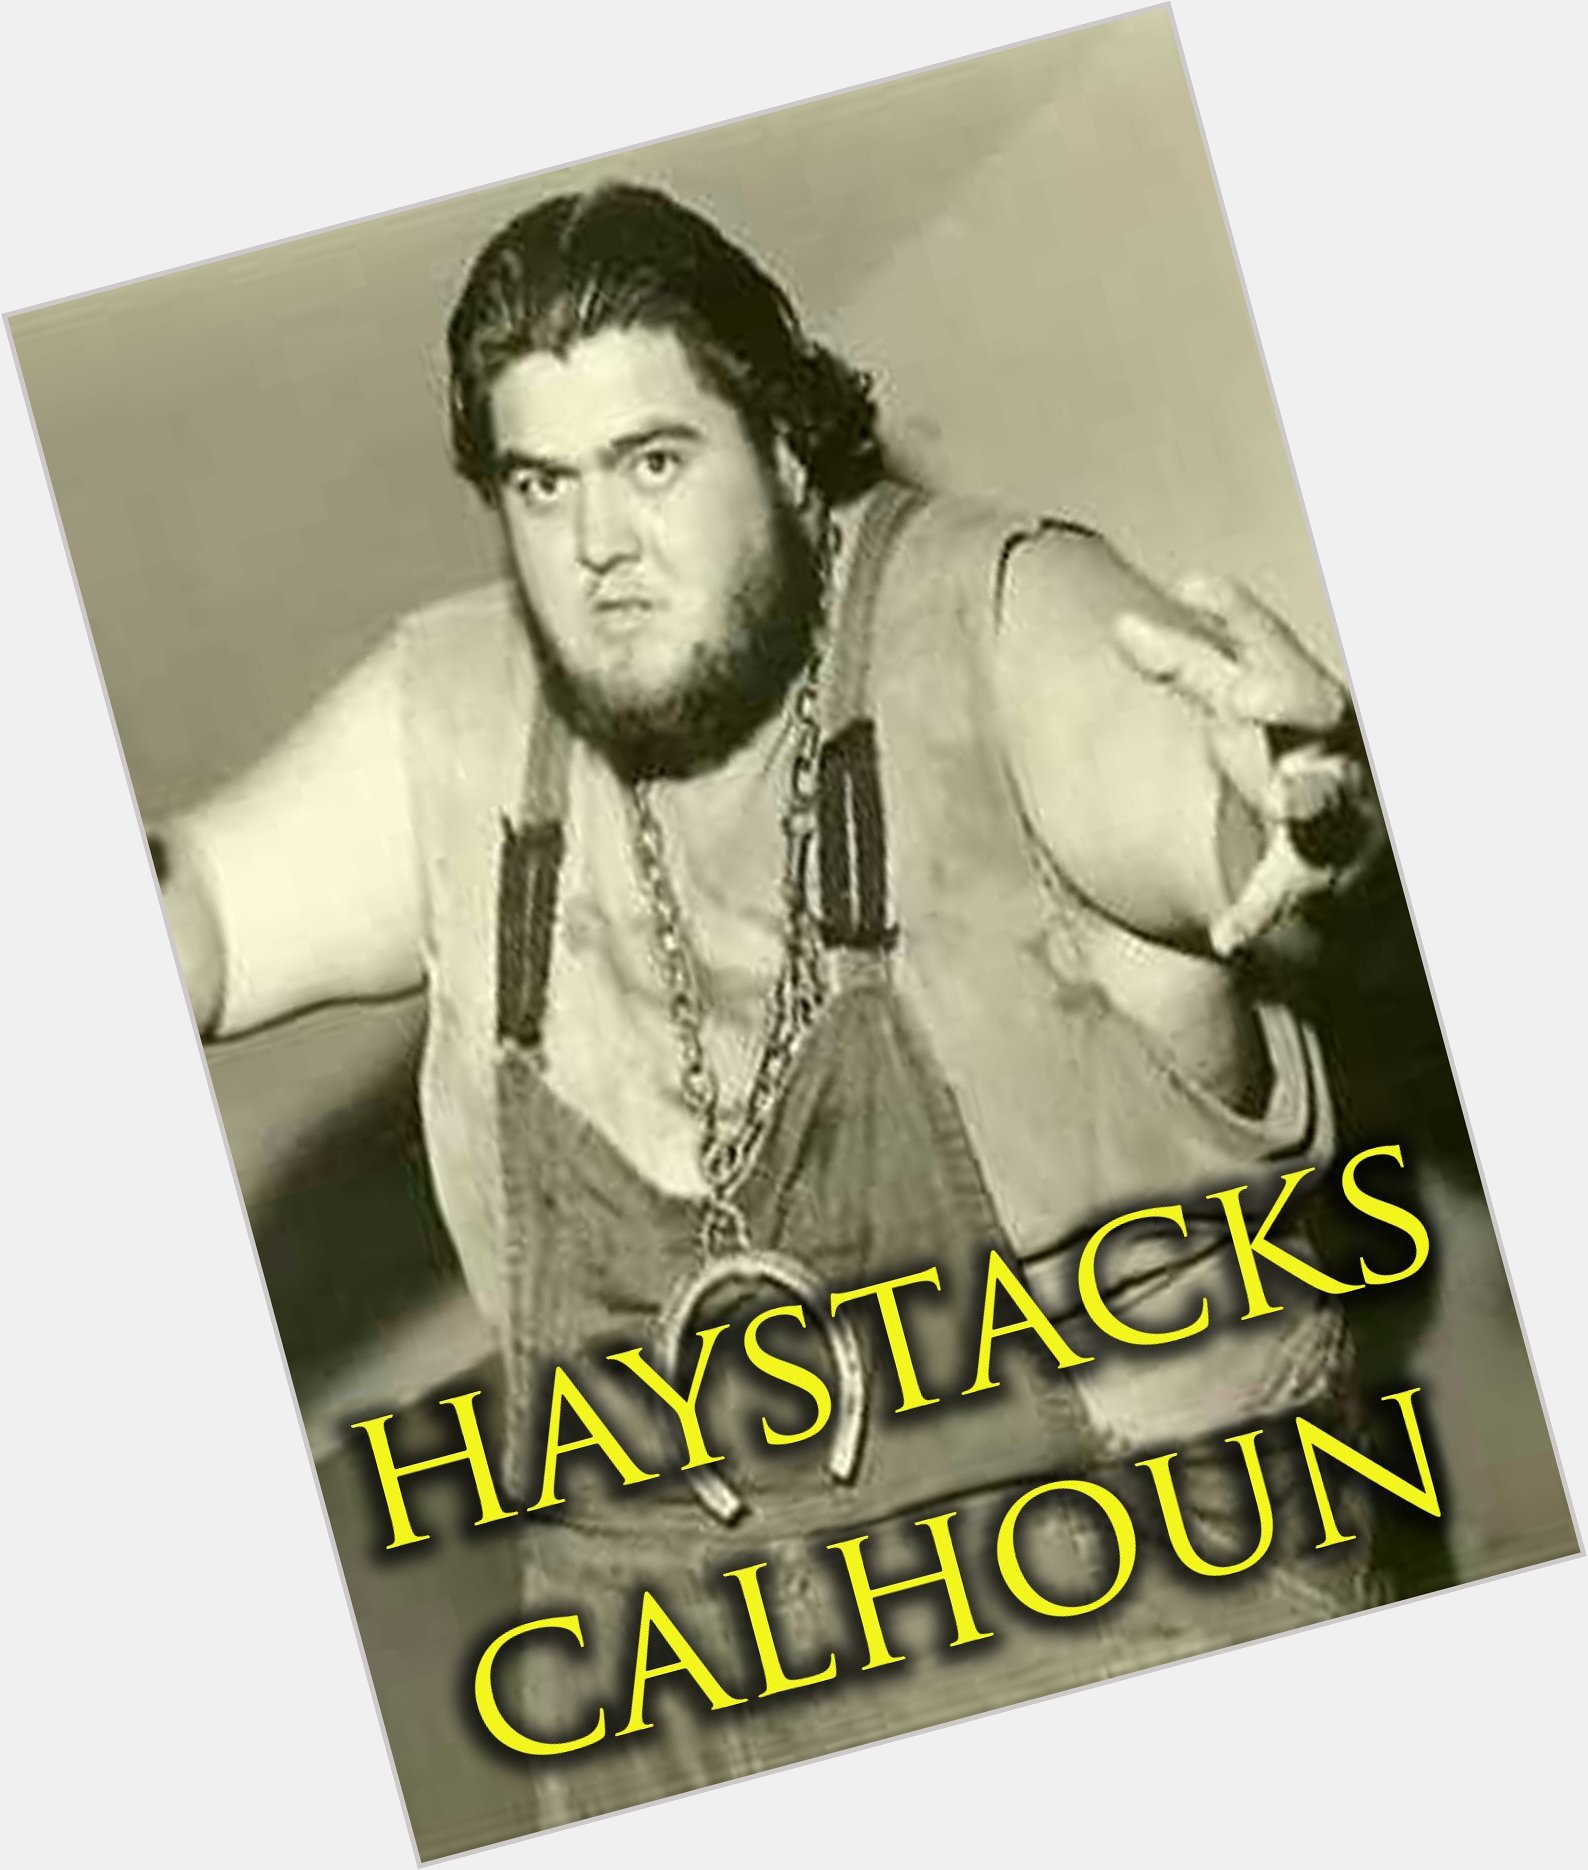 William Haystacks Calhoun shirtless bikini